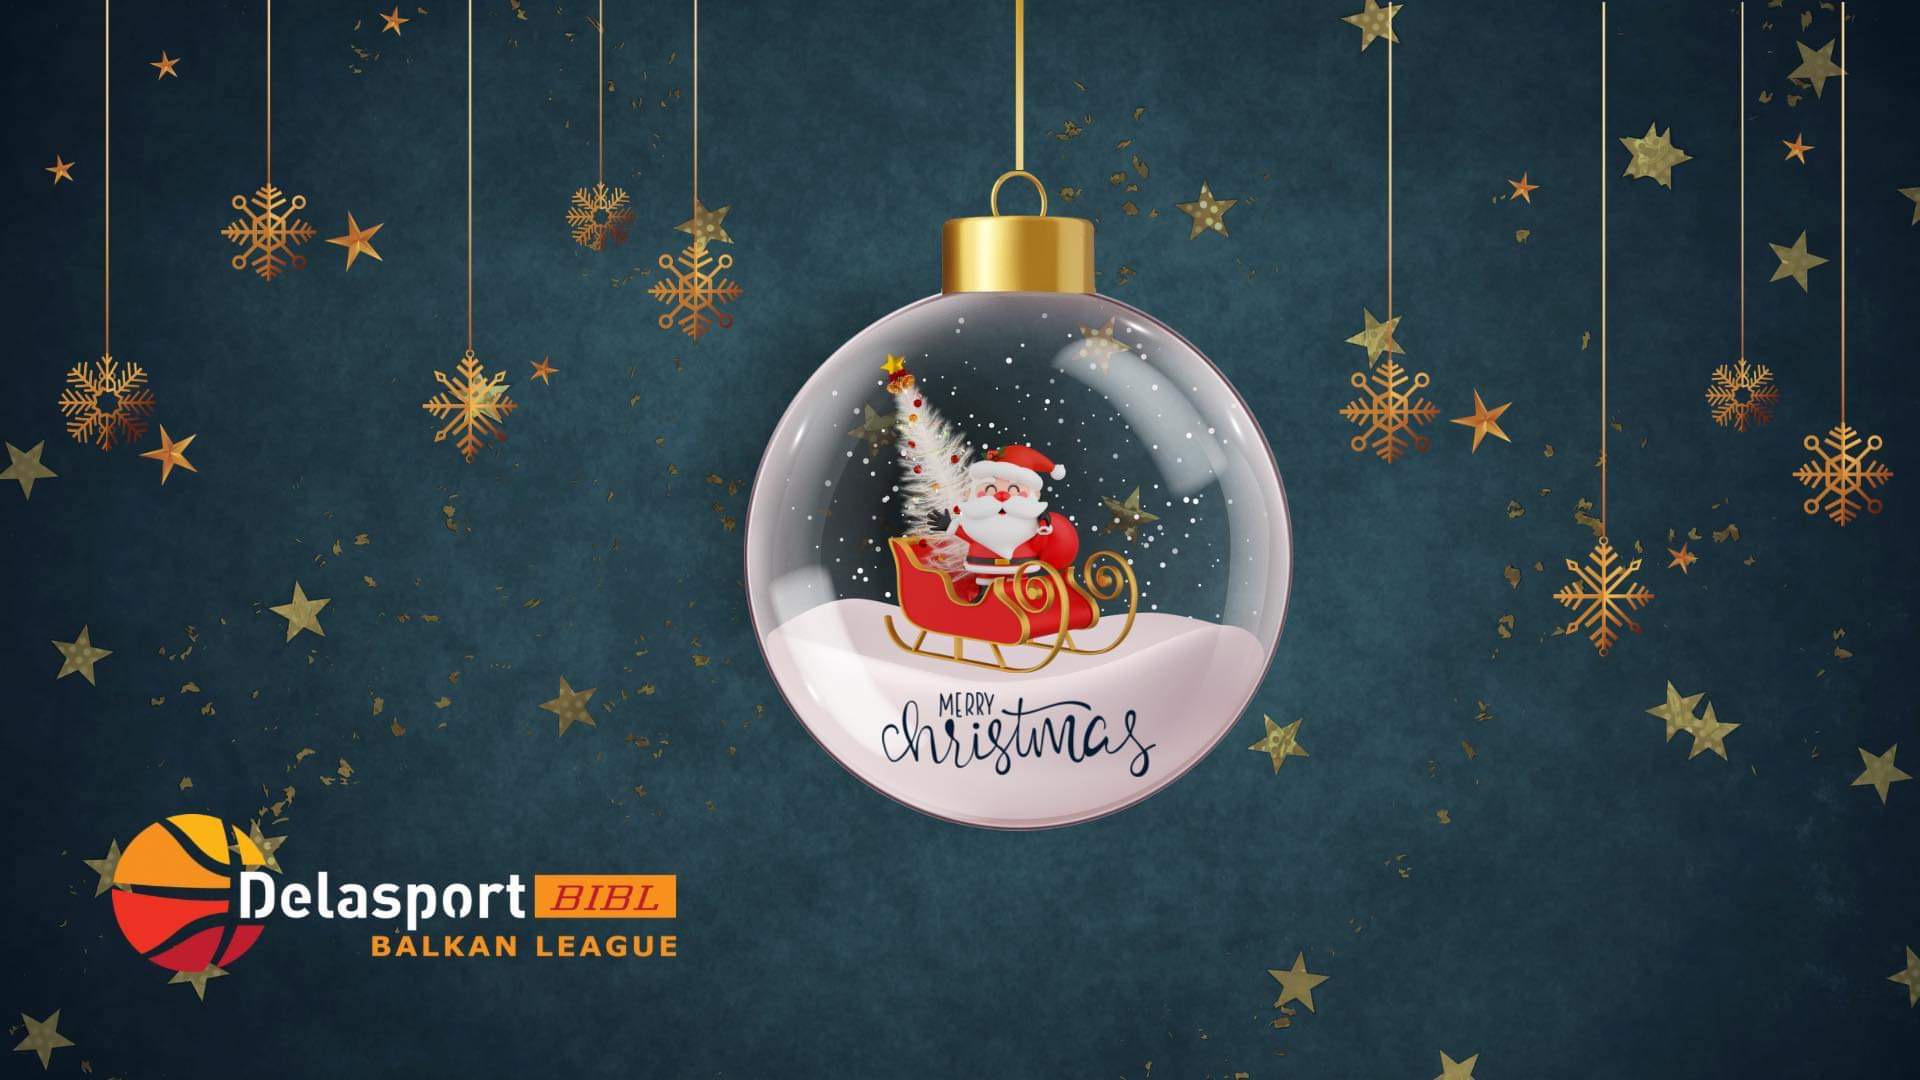 Delasport Balkan League wishes you Happy Holidays!